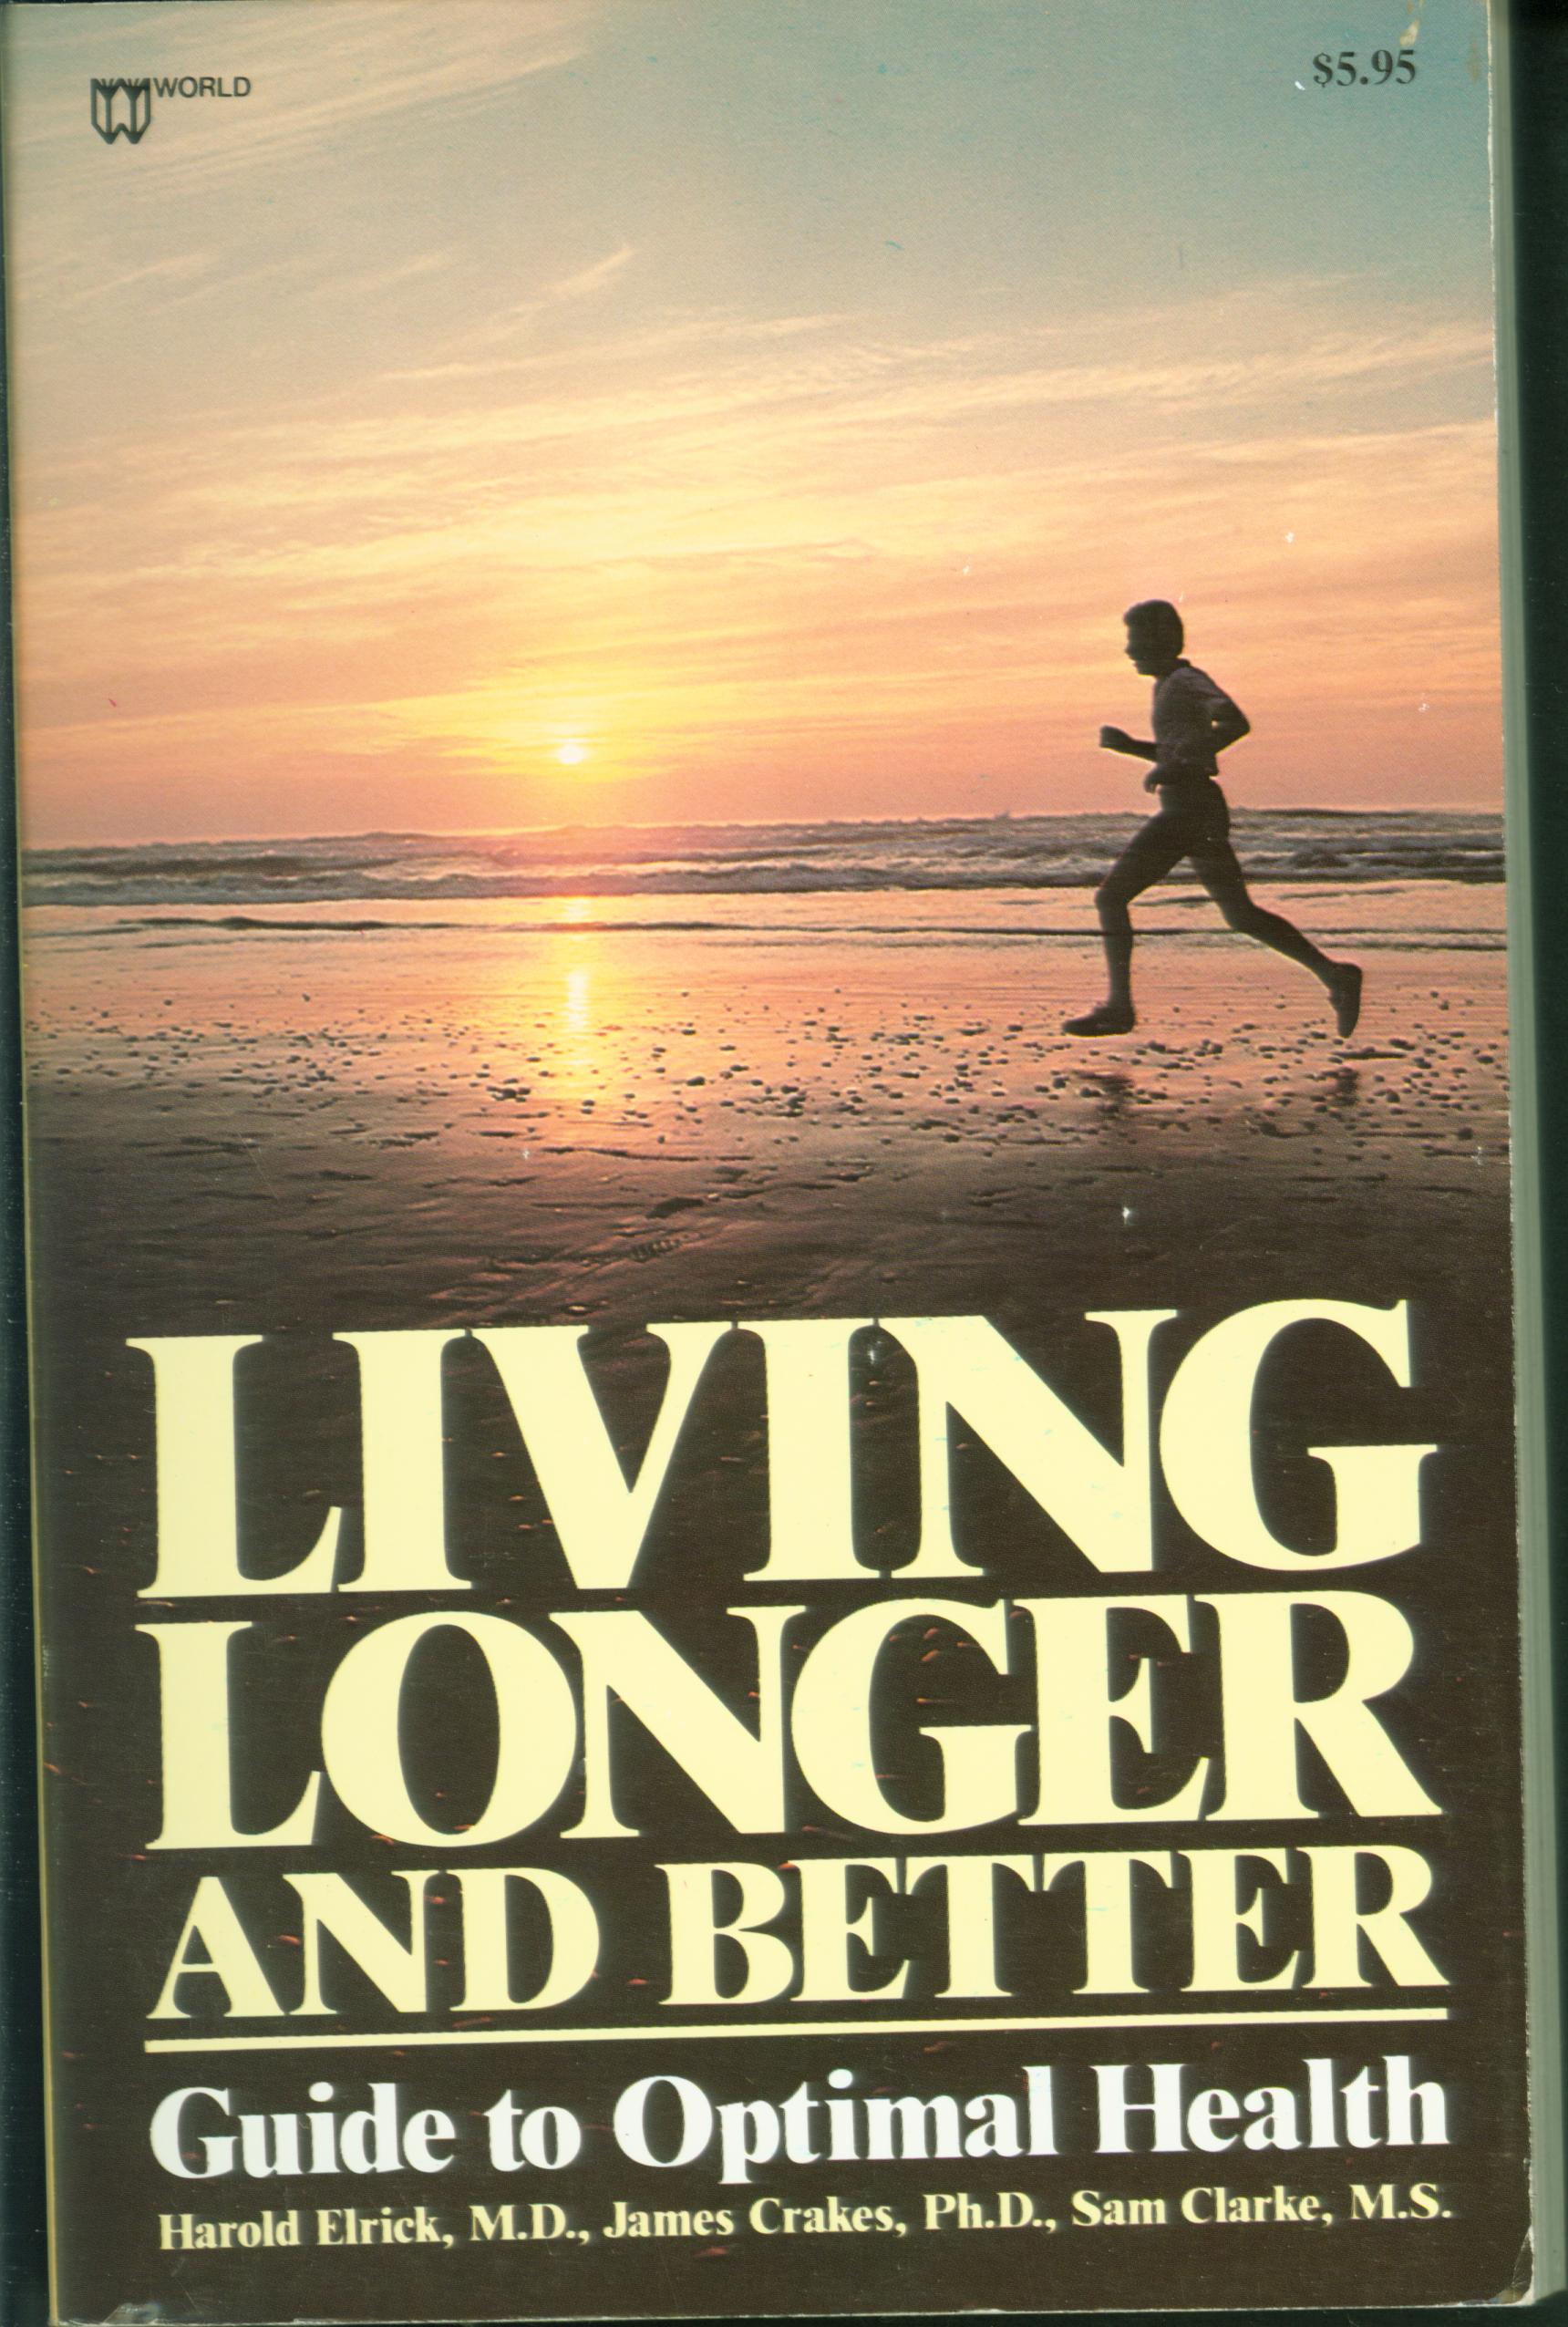 LIVING LONGER AND BETTER: guide to optimal health. 